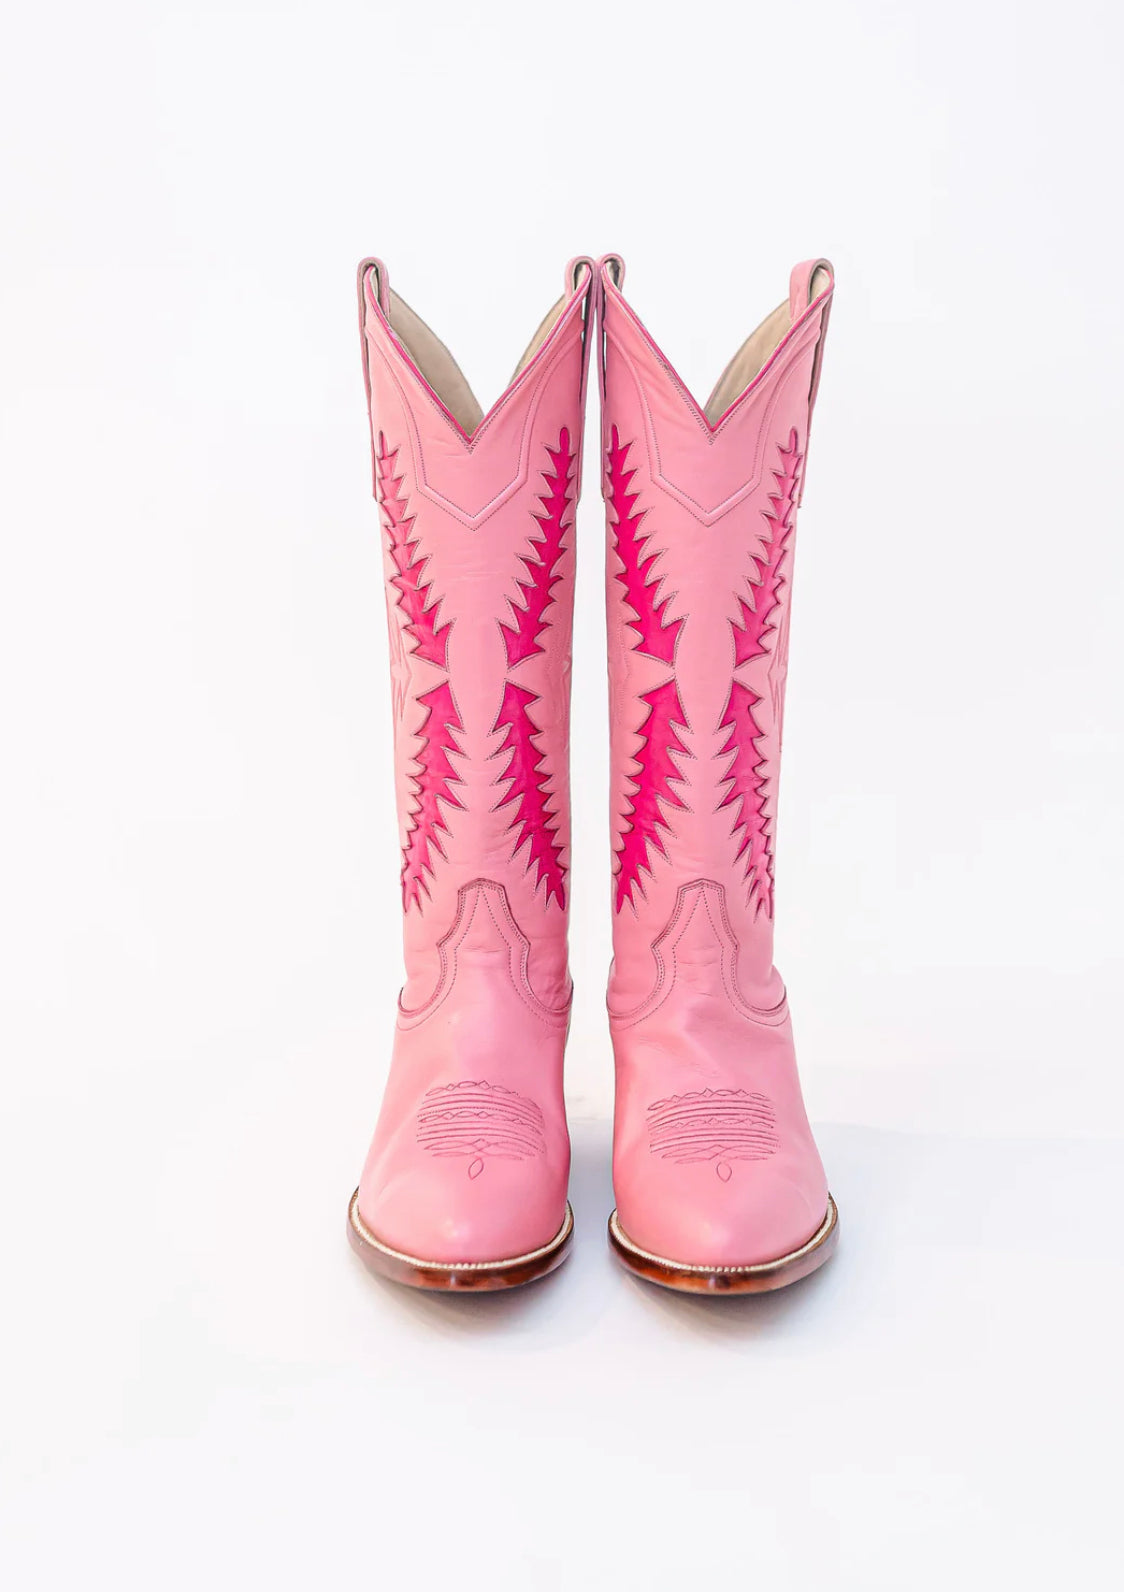 Petite Paloma Finnley Boot - Pink/Hot Pink